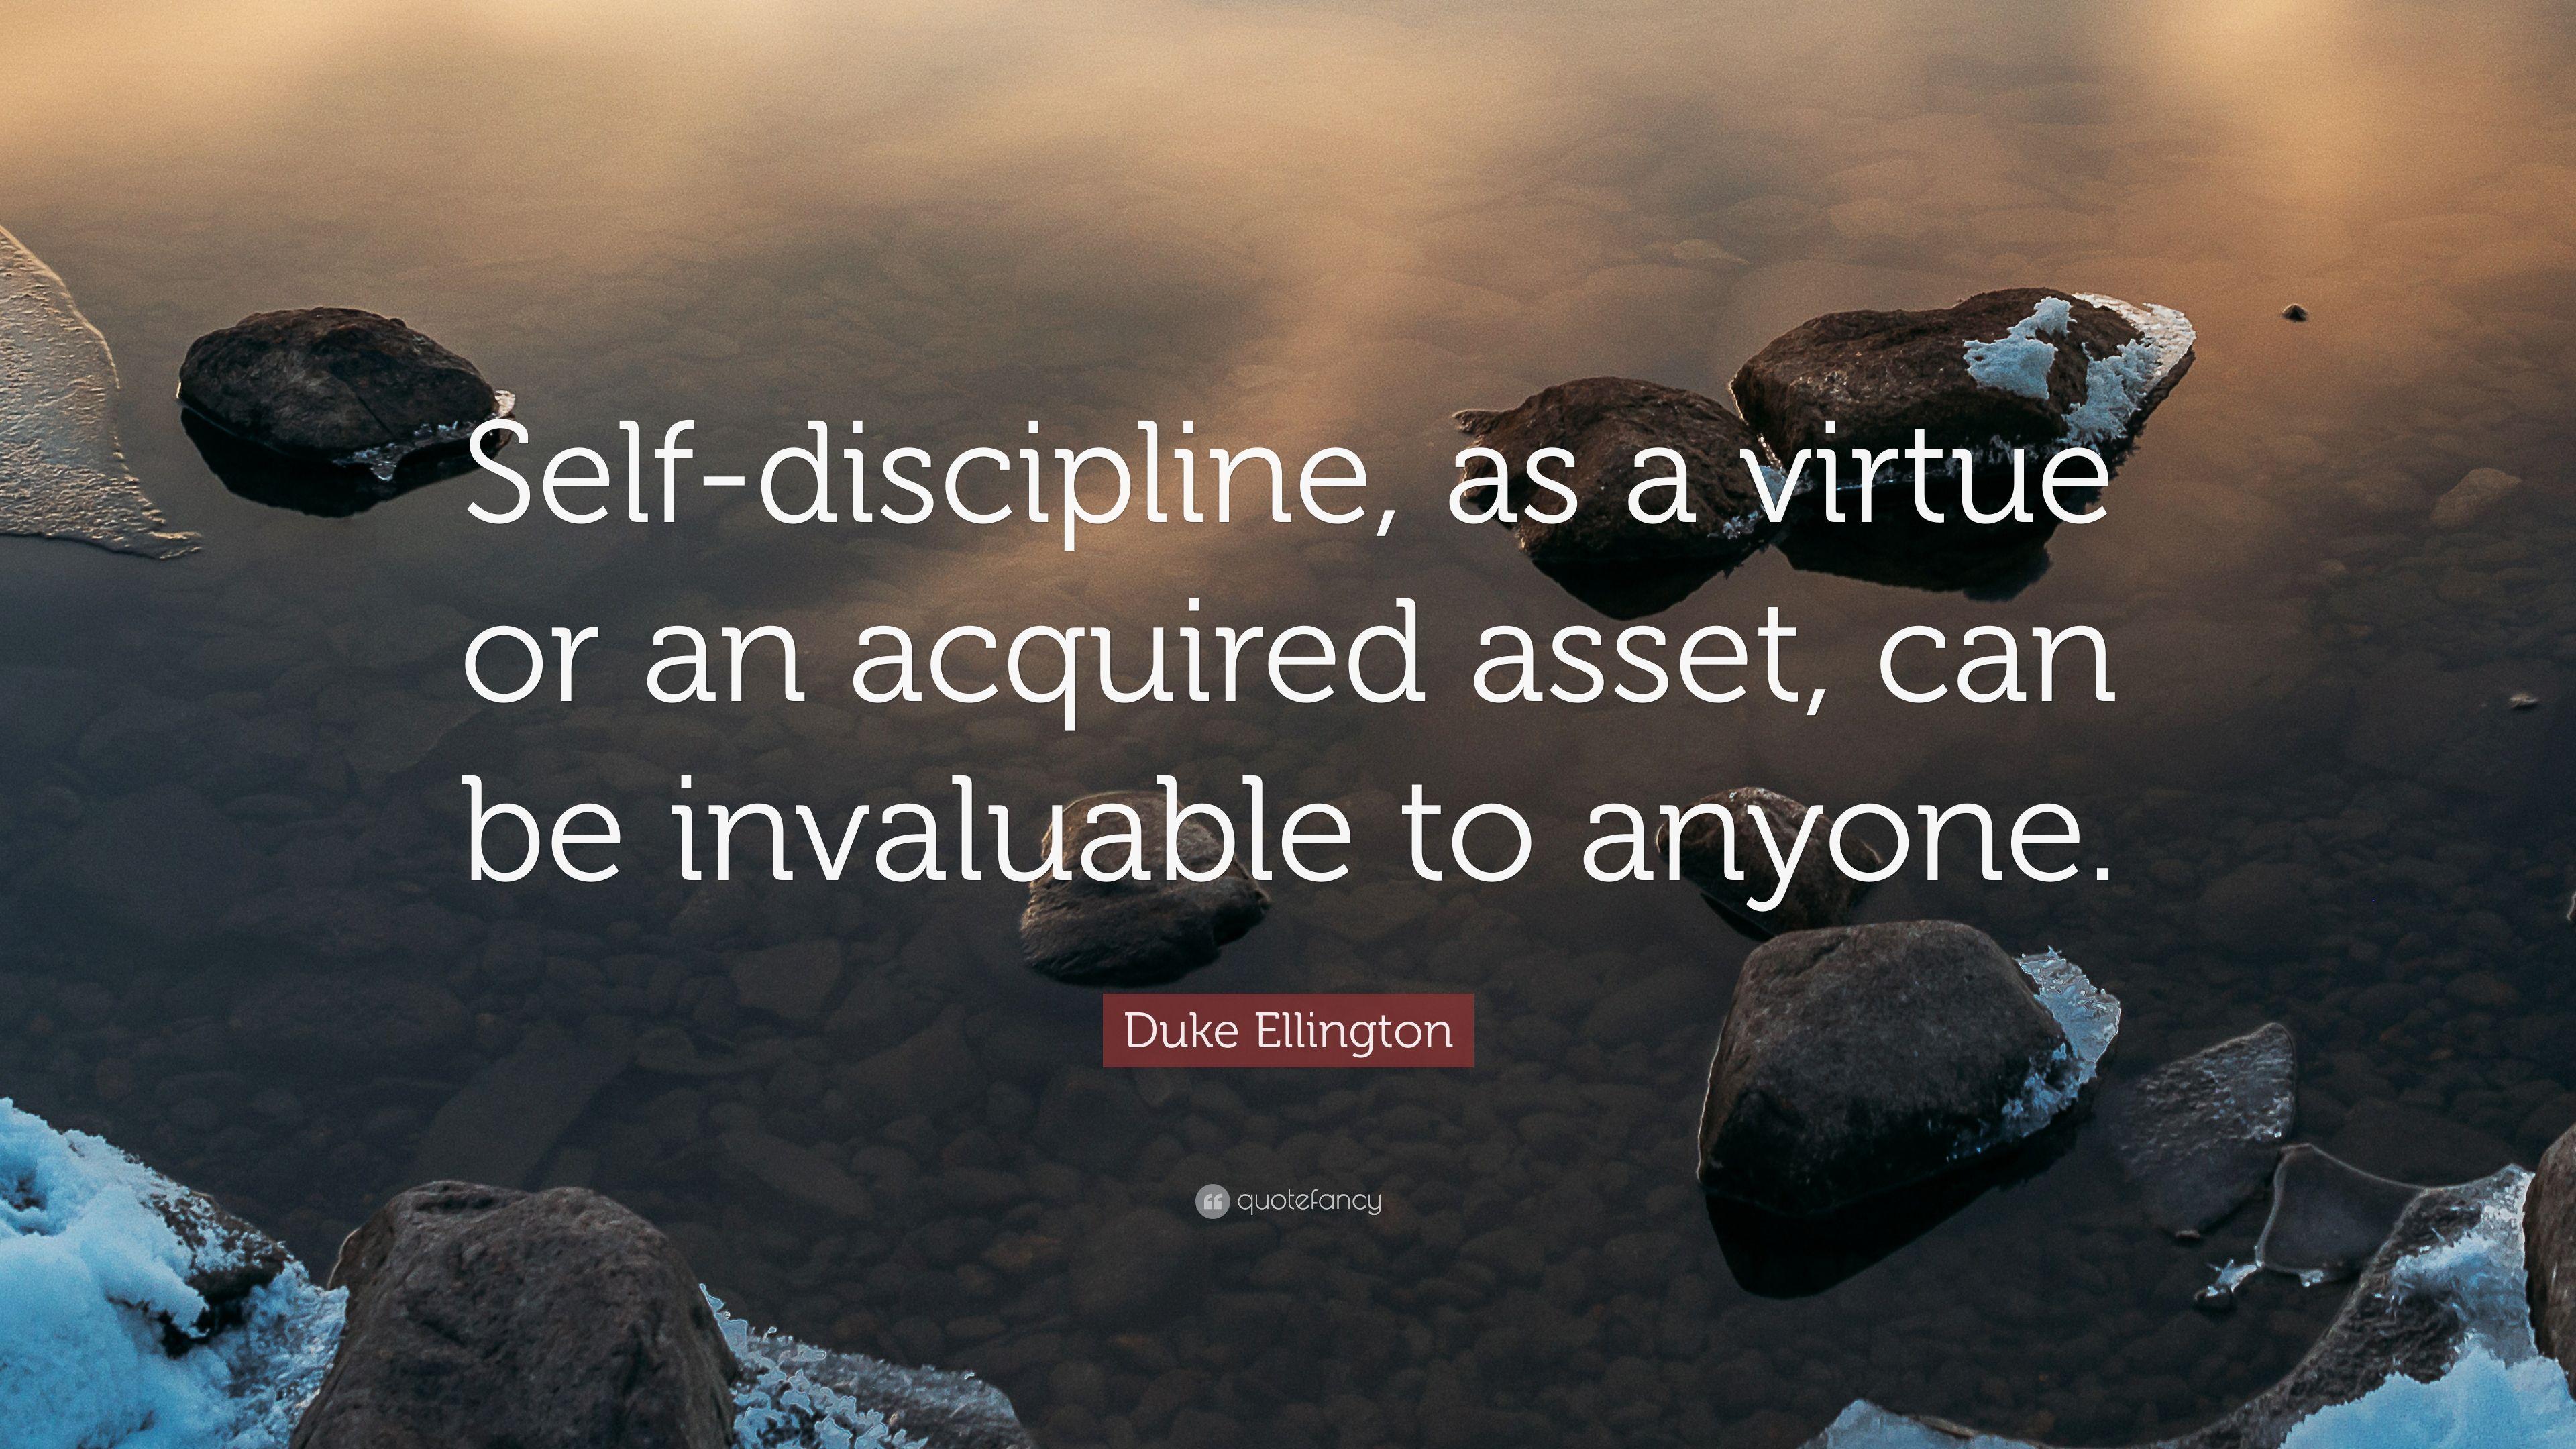 Duke Ellington Quote: “Self Discipline, As A Virtue Or An